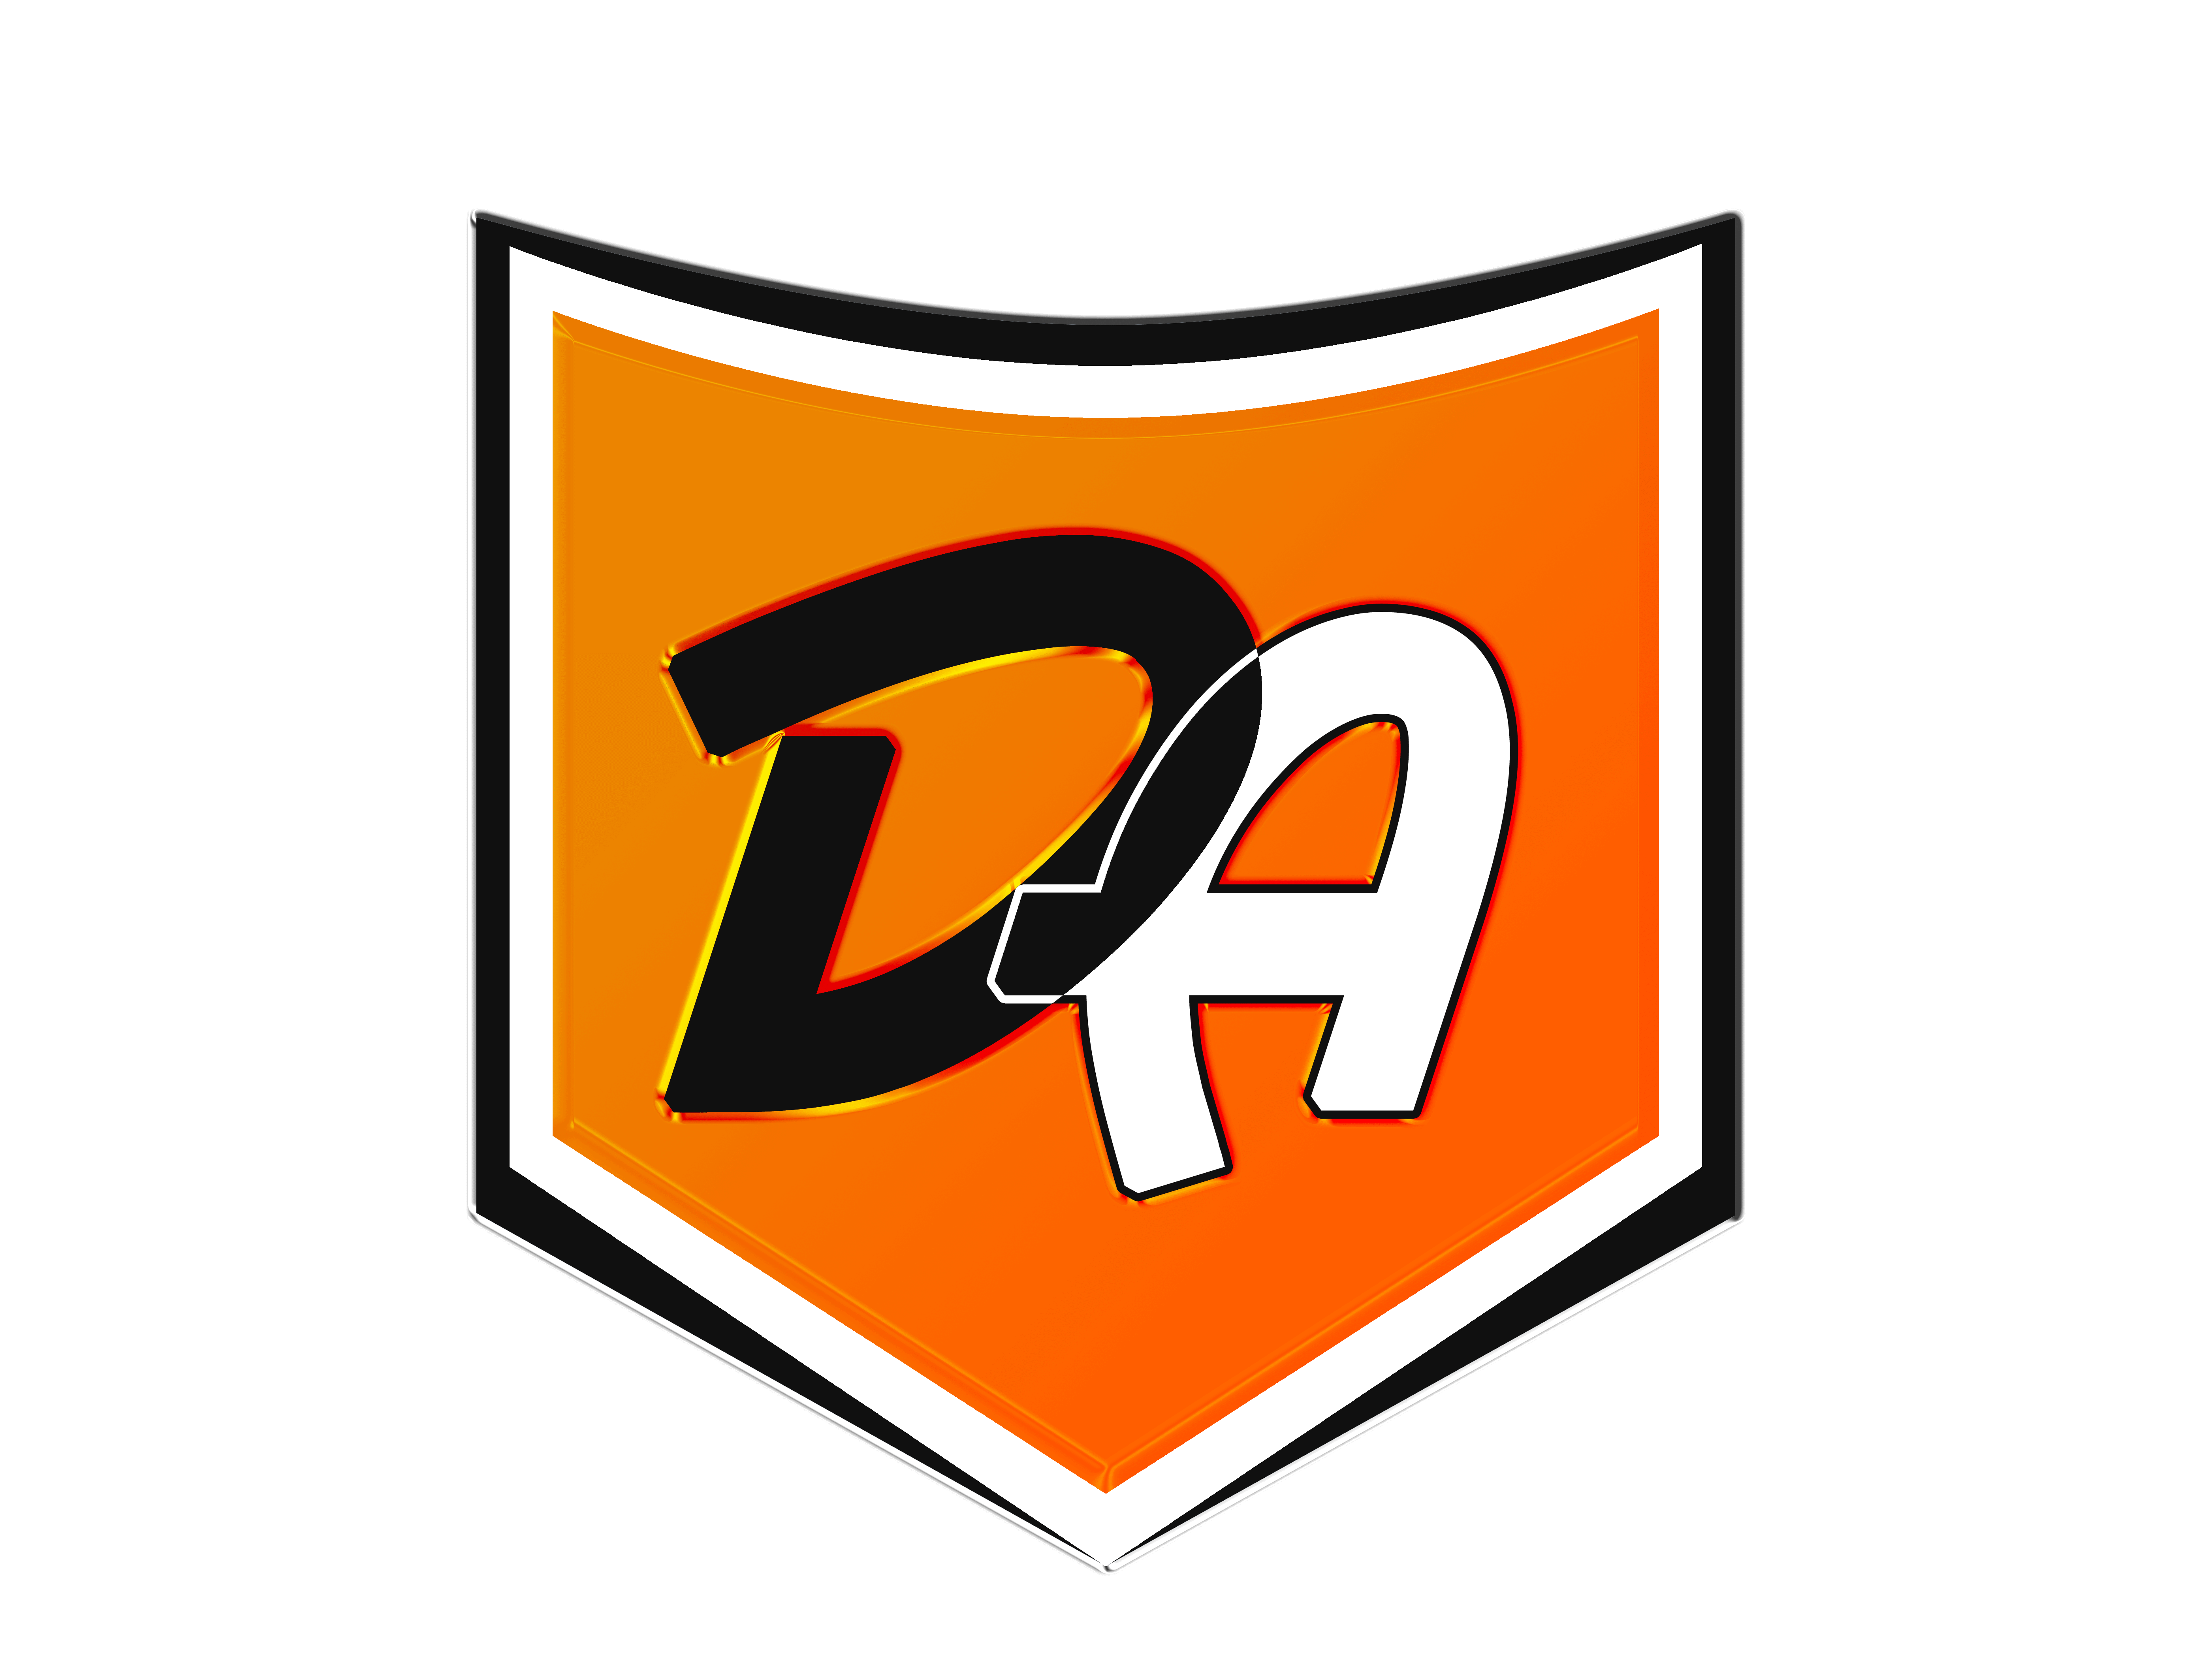 Davidayo: About US logo